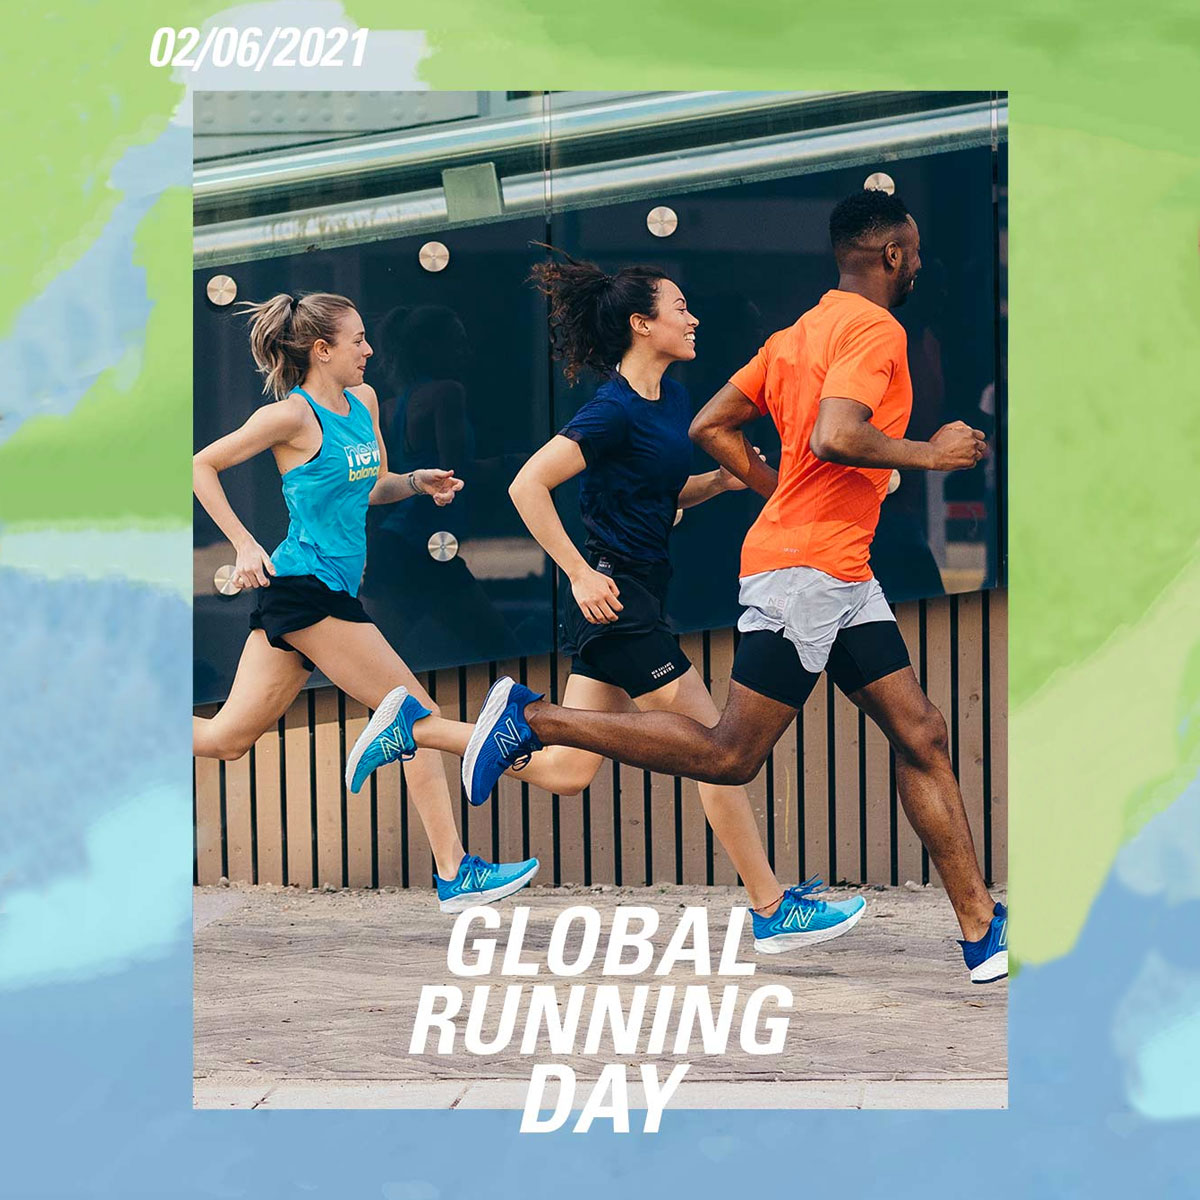 Gratis startnummer voor Global Running Day